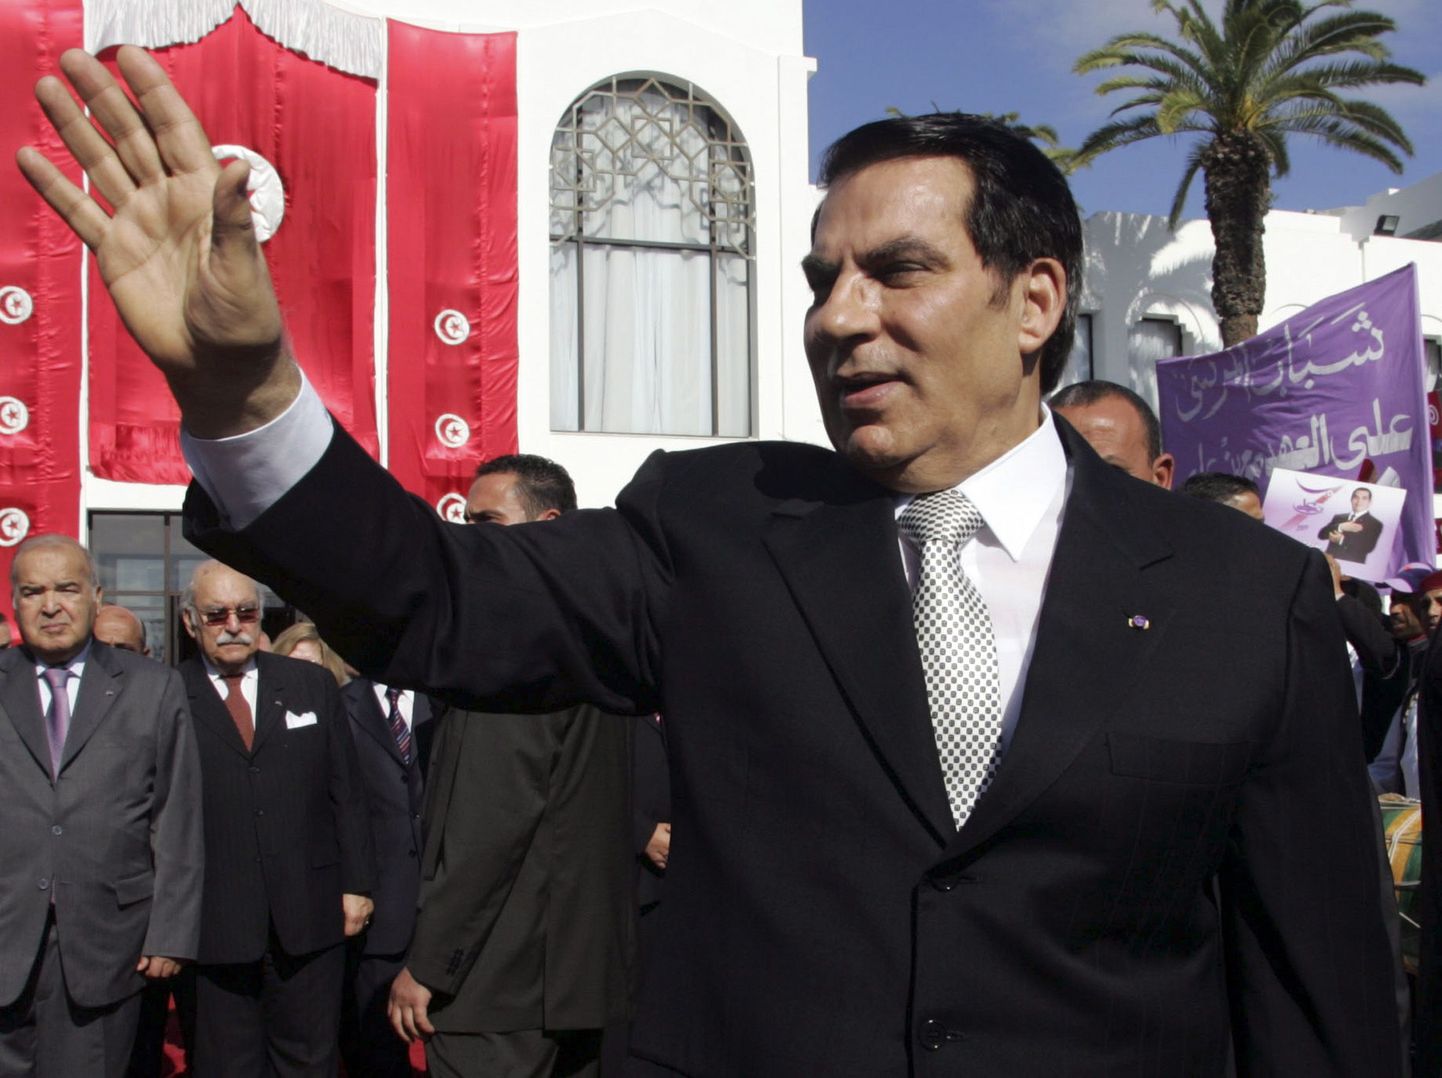 Tuneesia president Zine al-Abidine Ben Ali.